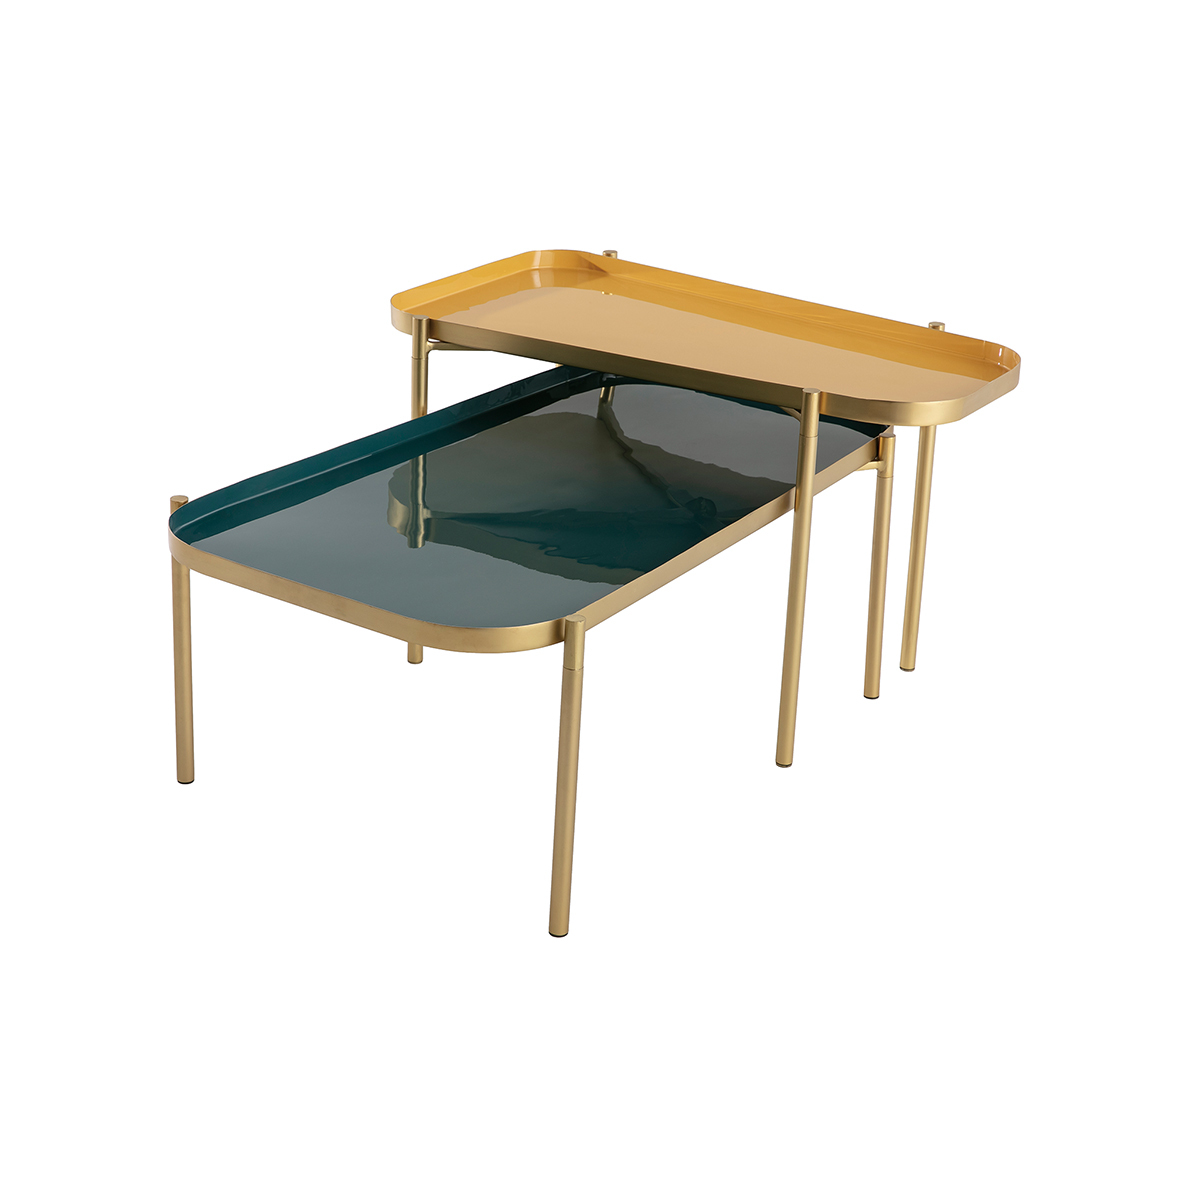 Tables basses gigognes design laquées bleu et jaune (lot de 2) ZURIA vue1